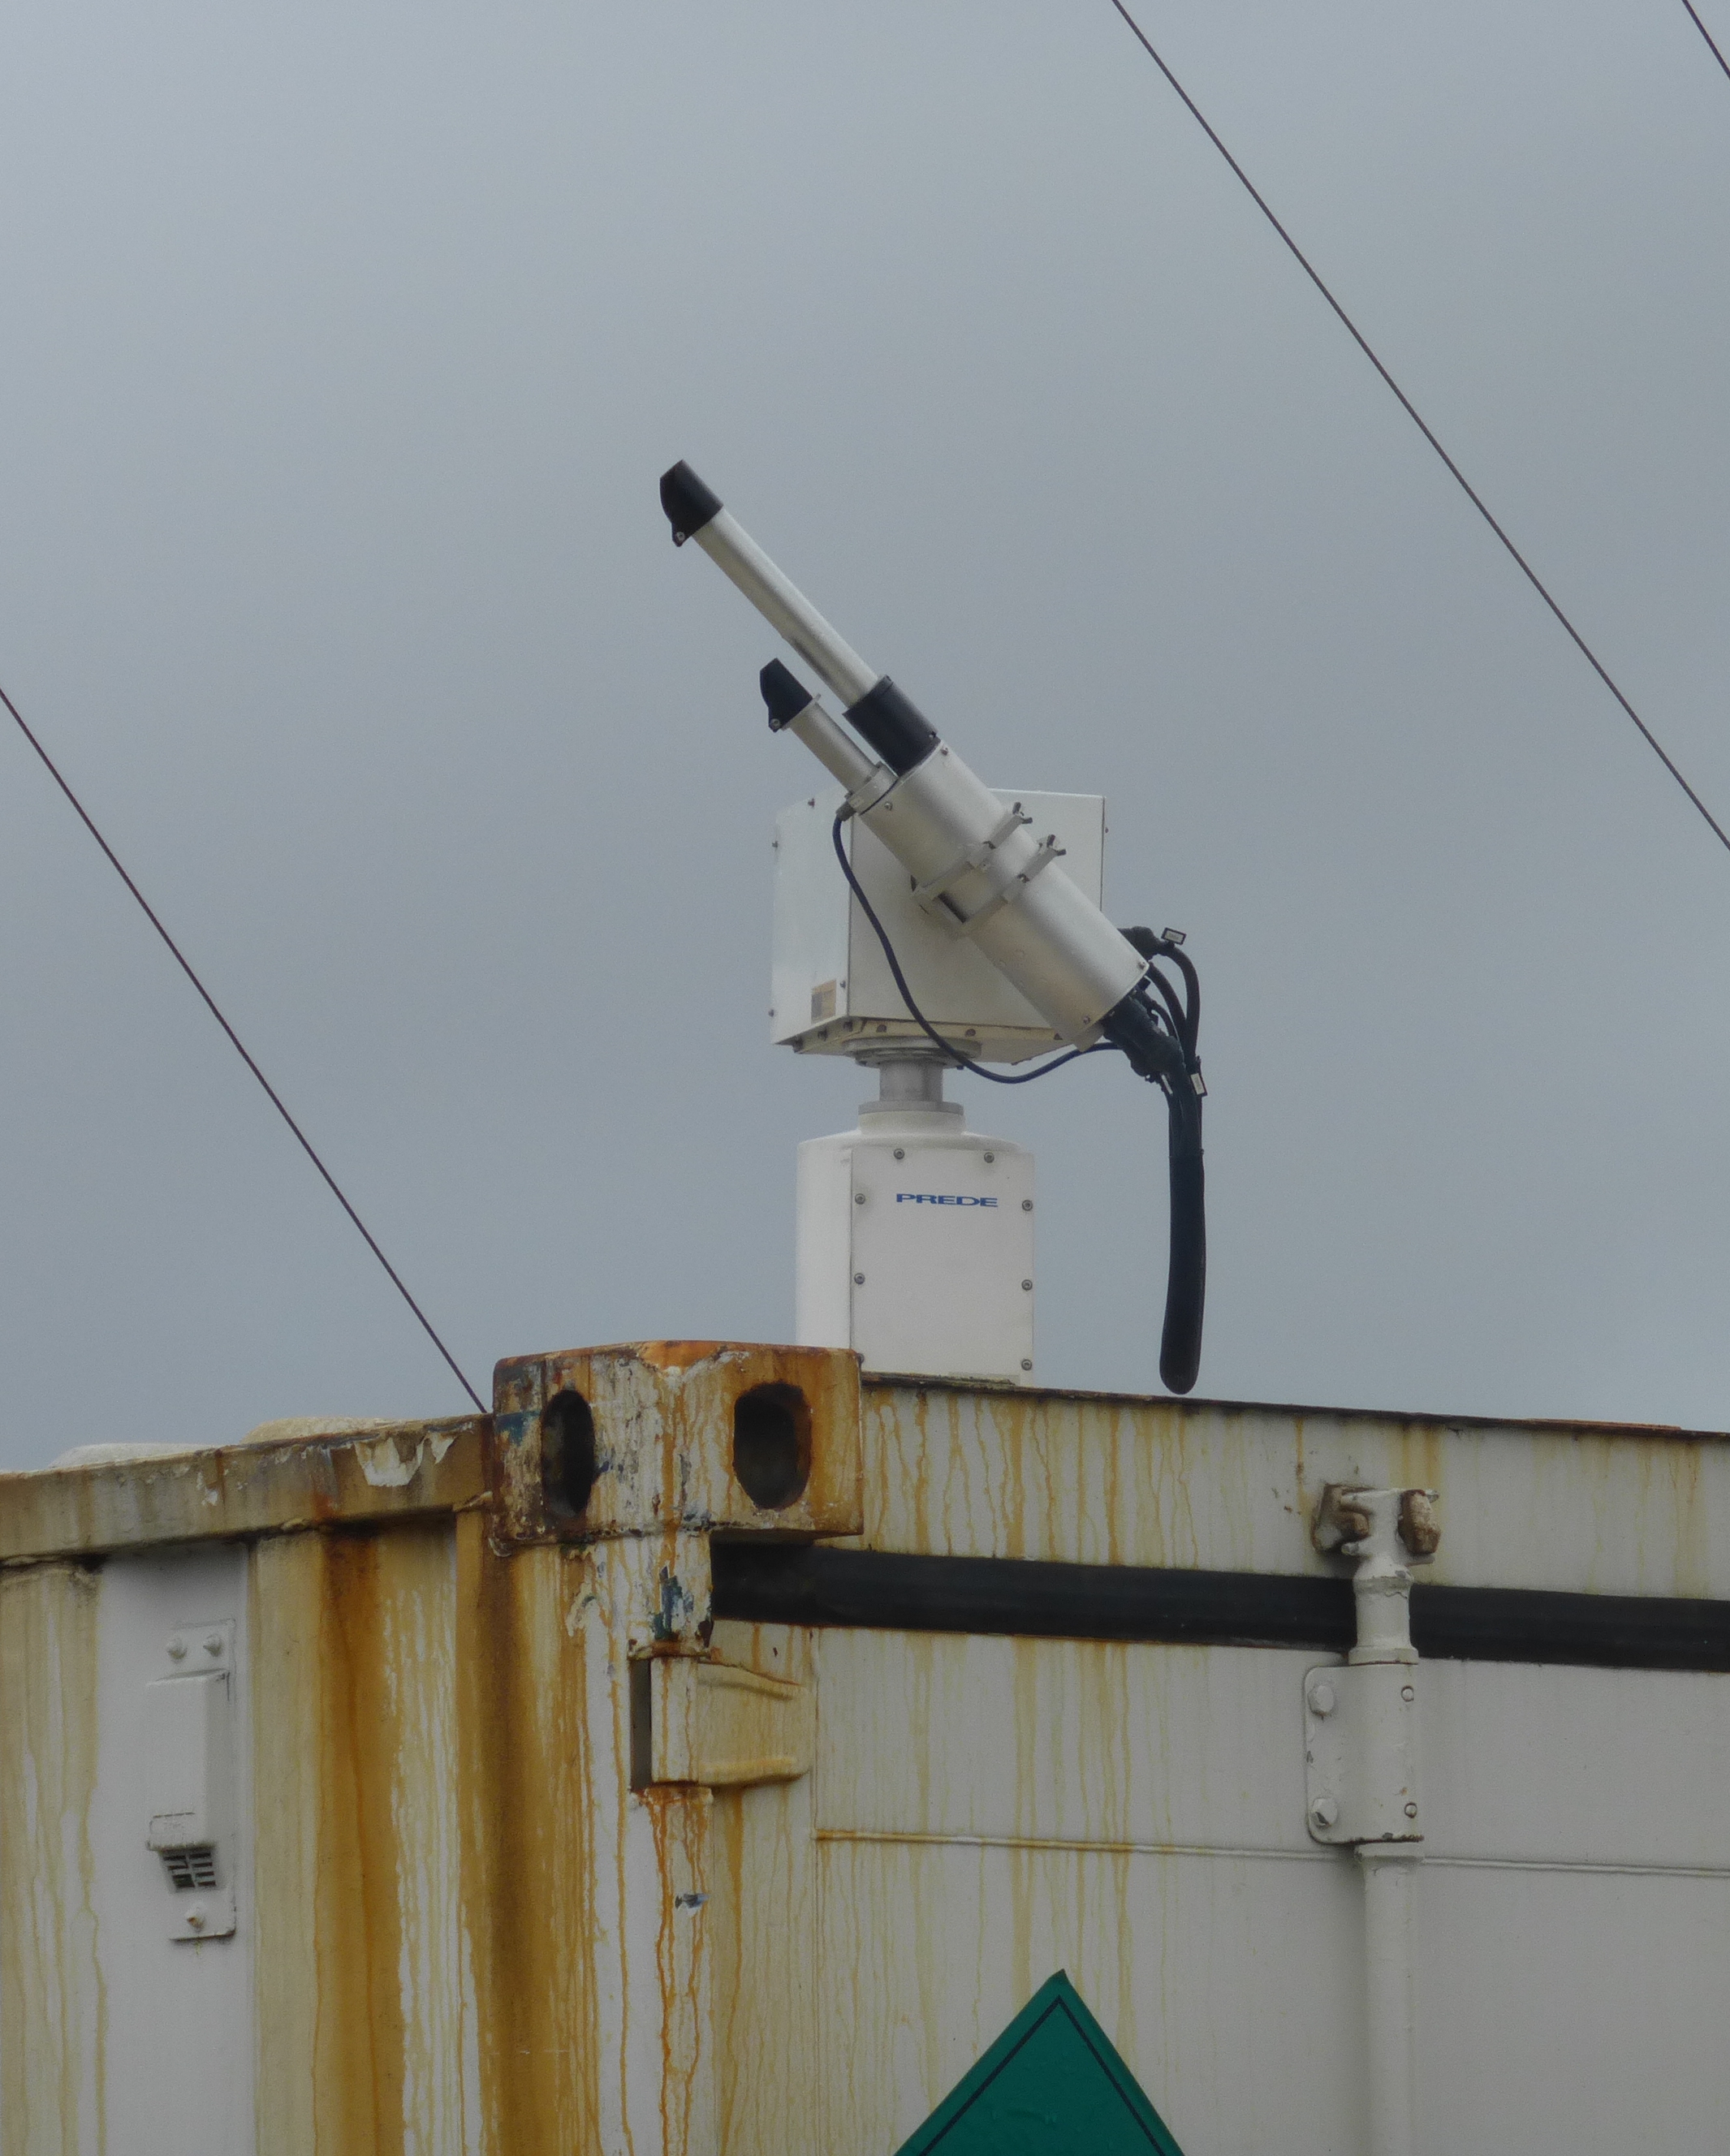 The Prede sunphotometer deployed at Praia (Cape Verde) during SAVEX-D flight campaign. Copyright Victor Estelles.